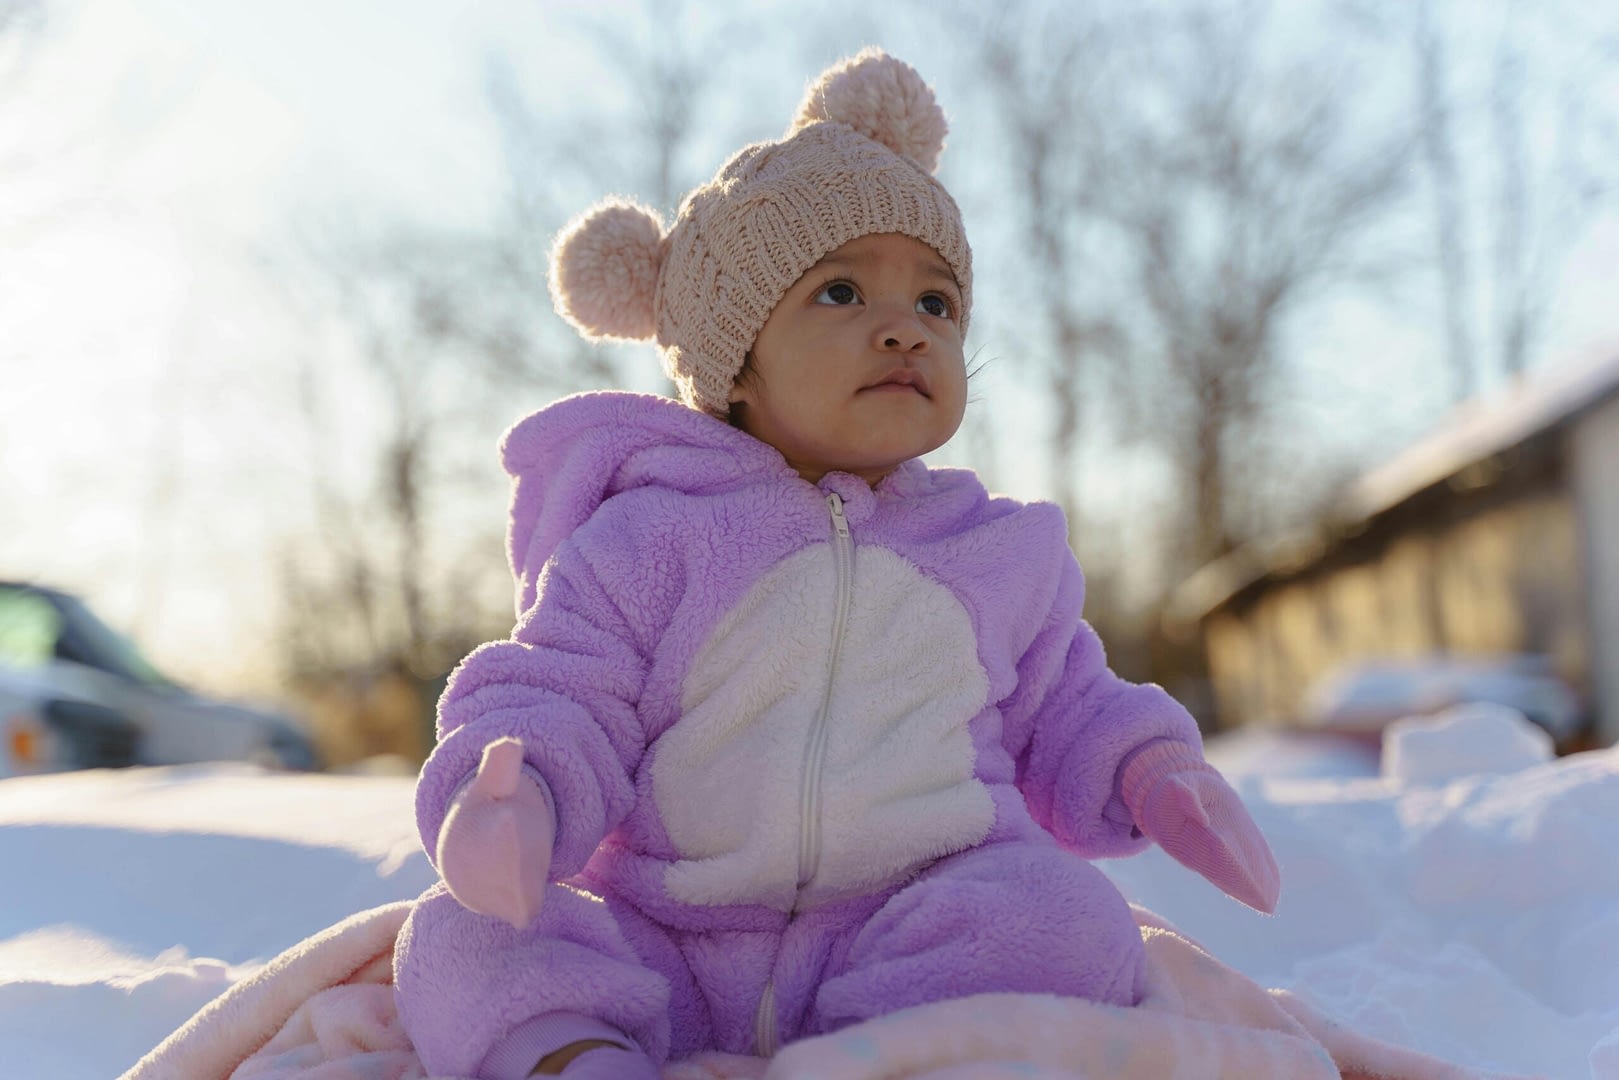 Pinky Chips - Warm wardrobe item for children in winter